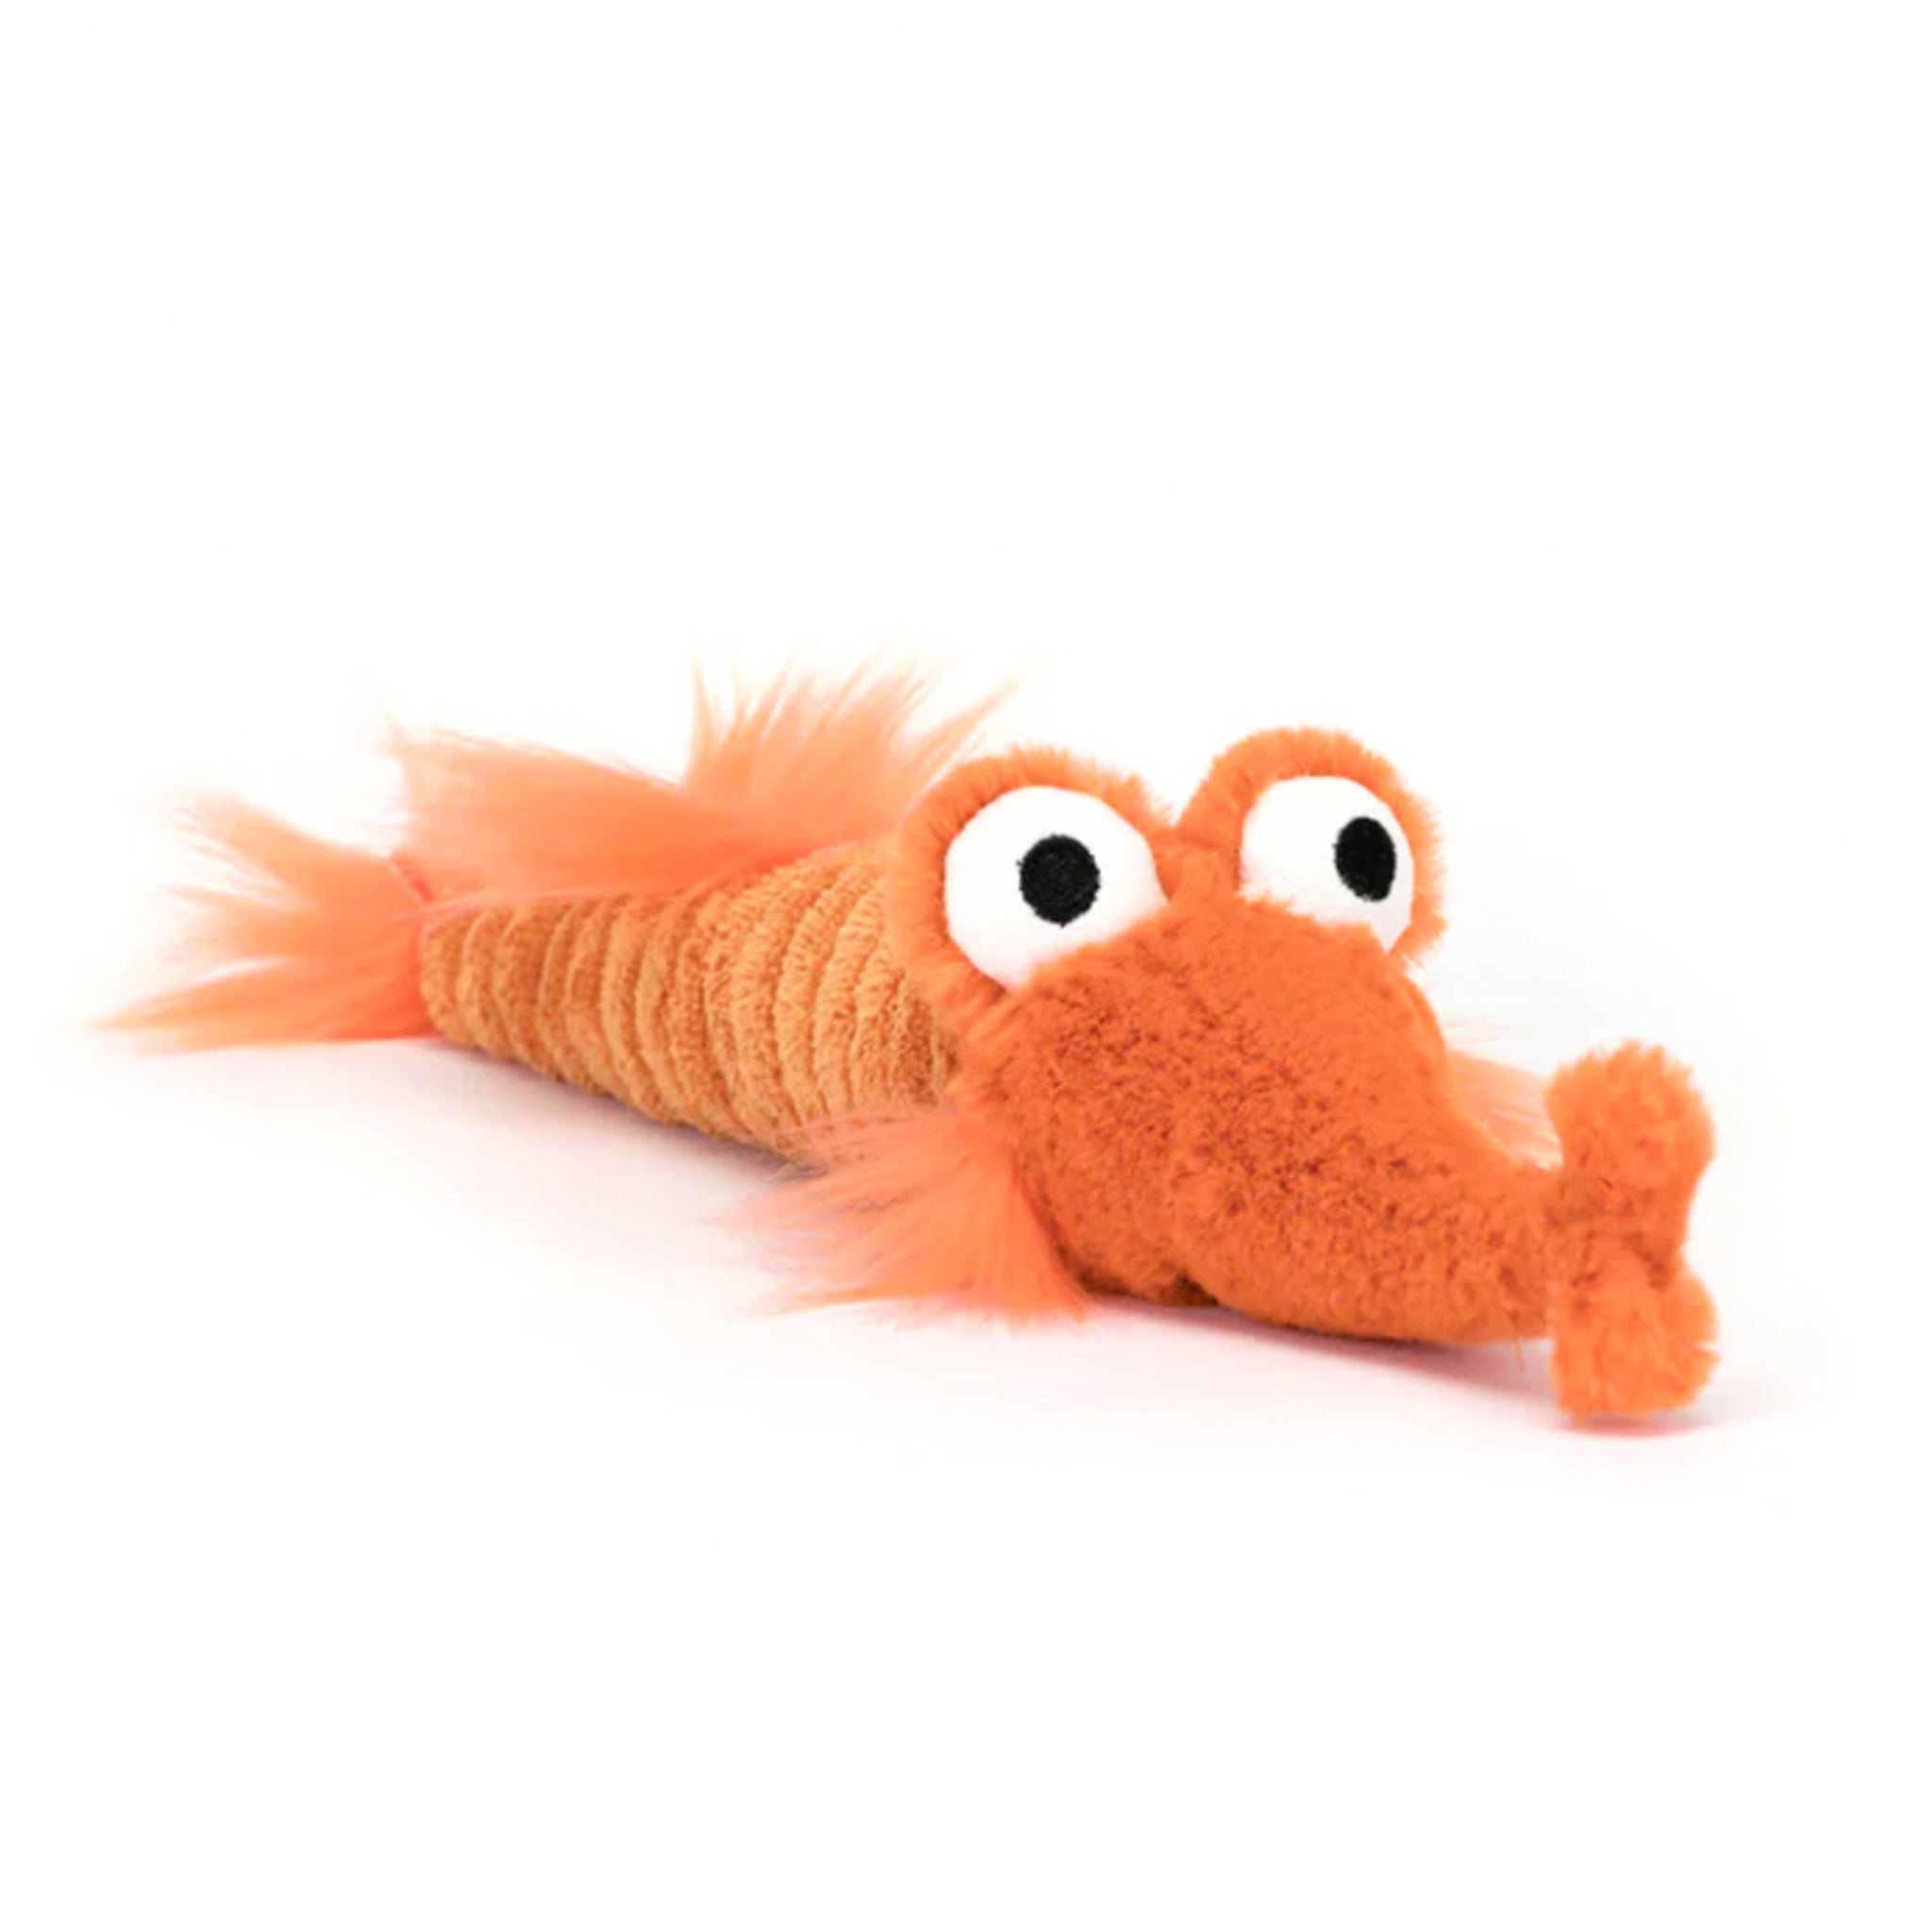 A bright orange razor fish shaped stuffed toy. 